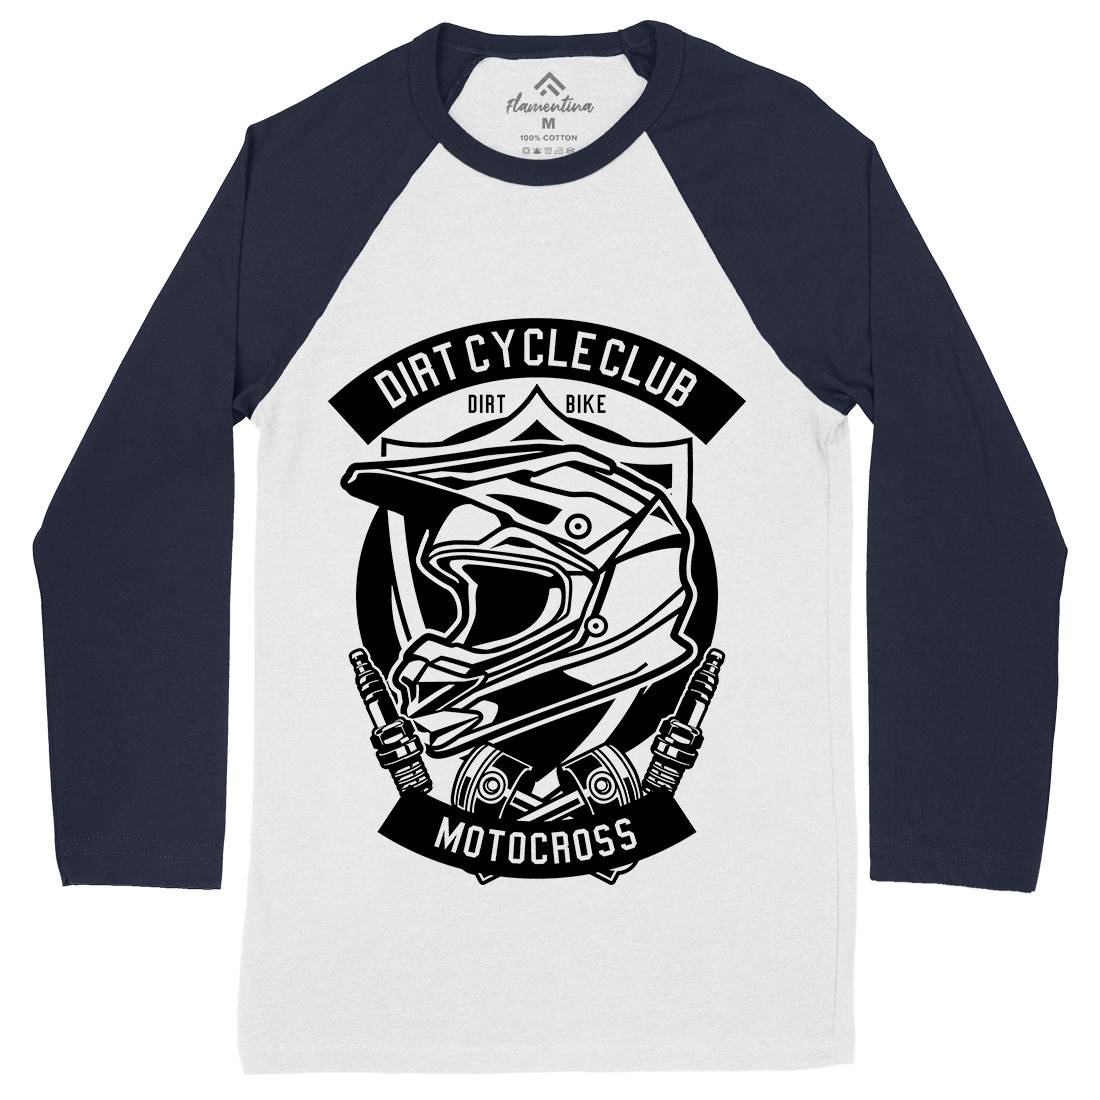 Dirty Cycle Club Mens Long Sleeve Baseball T-Shirt Motorcycles B532